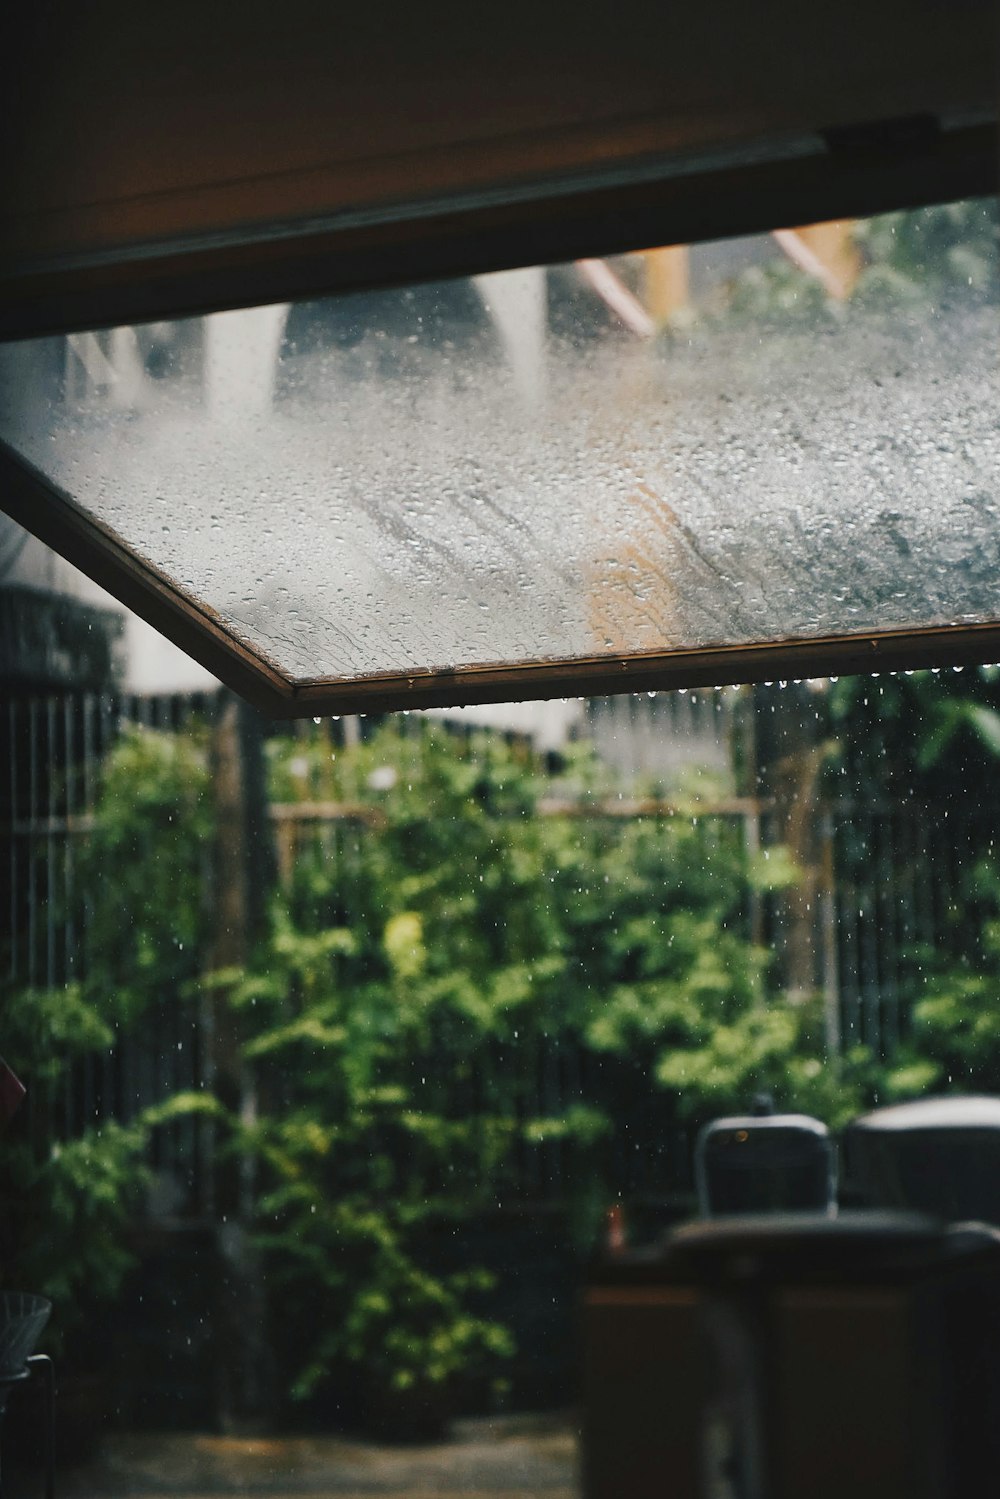 Rain drops on window glass photo – Free Outdoors Image on Unsplash